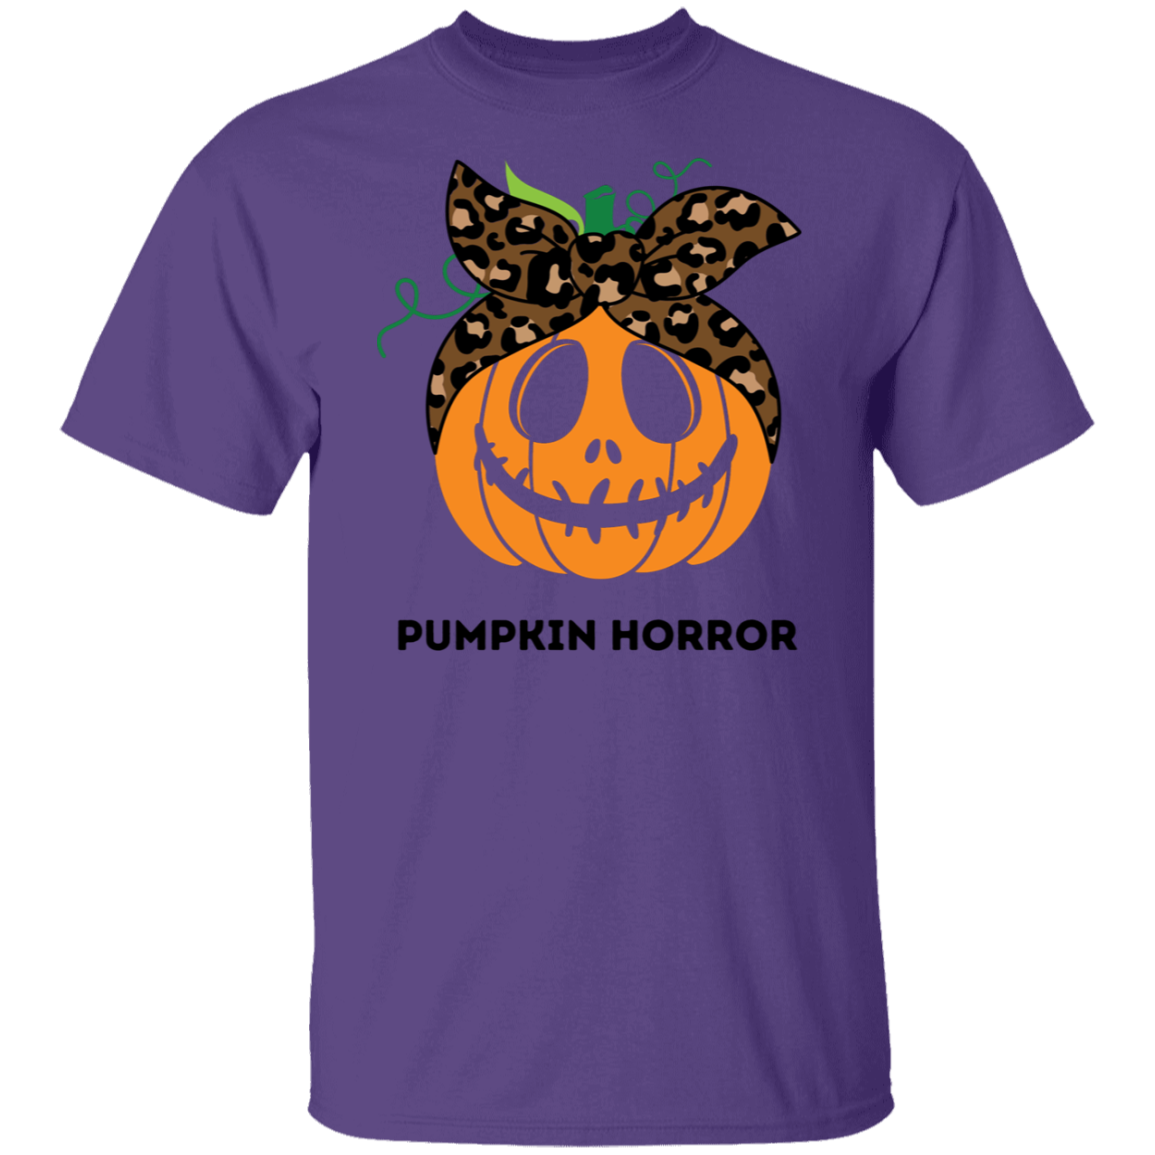 Pumpkin Horror- When you can't get enough Pumpkin Spice Honey! T-Shirt